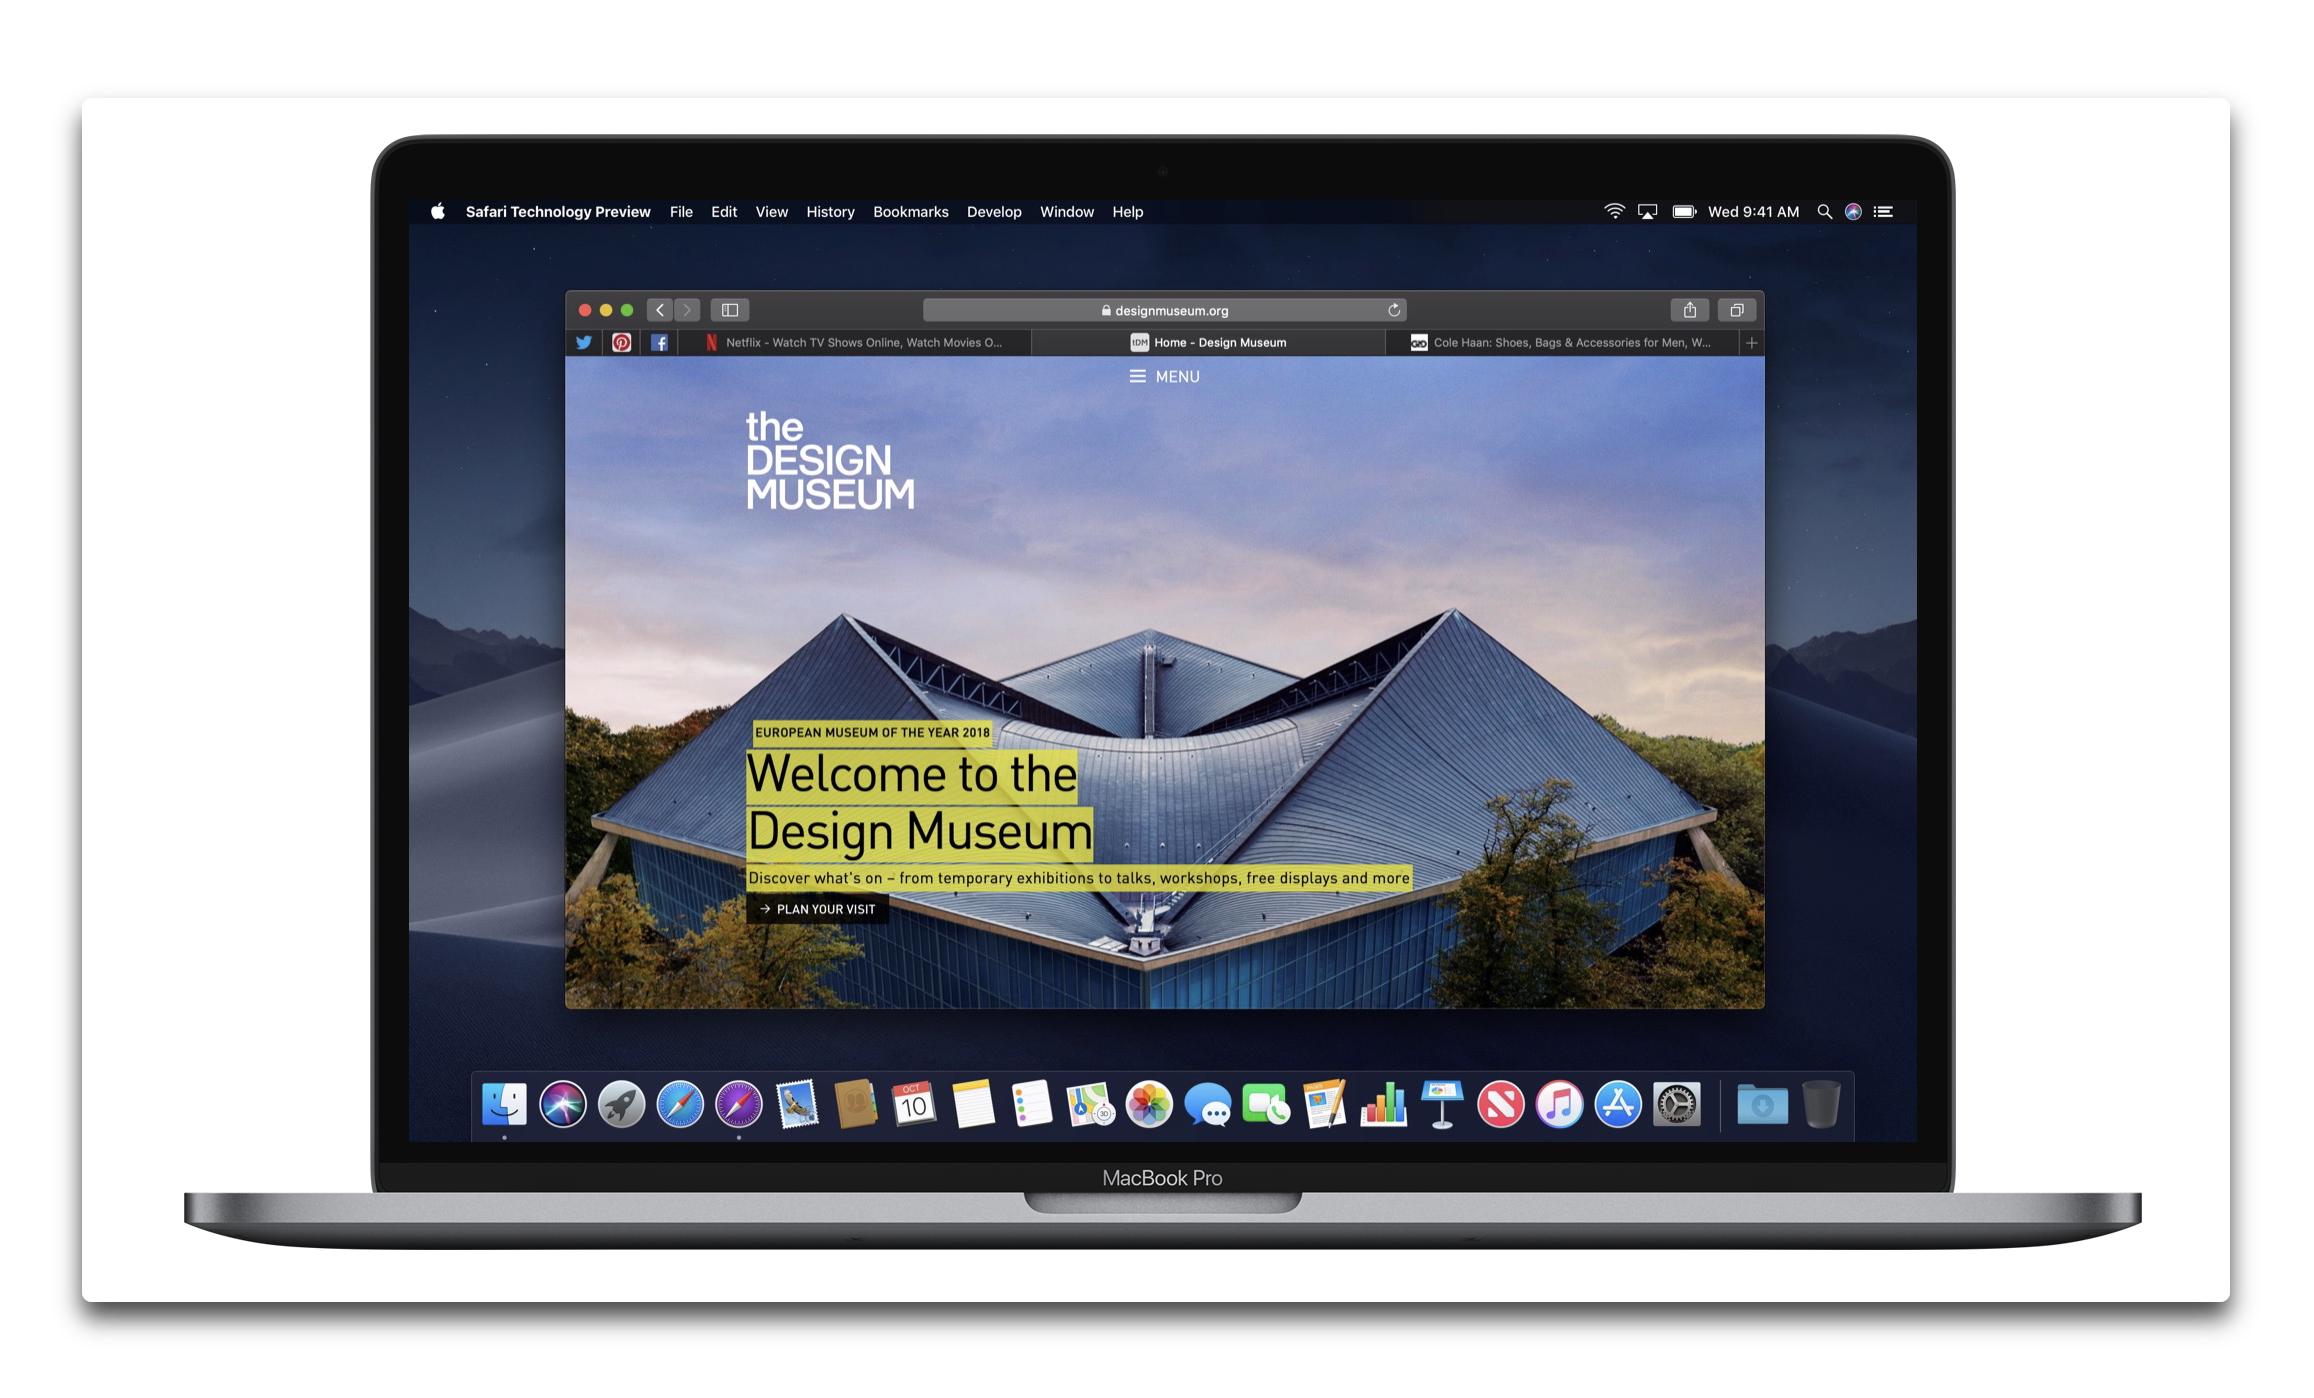 【Mac】Apple，「Safari Technology Preview Release 68」を開発者にリリース